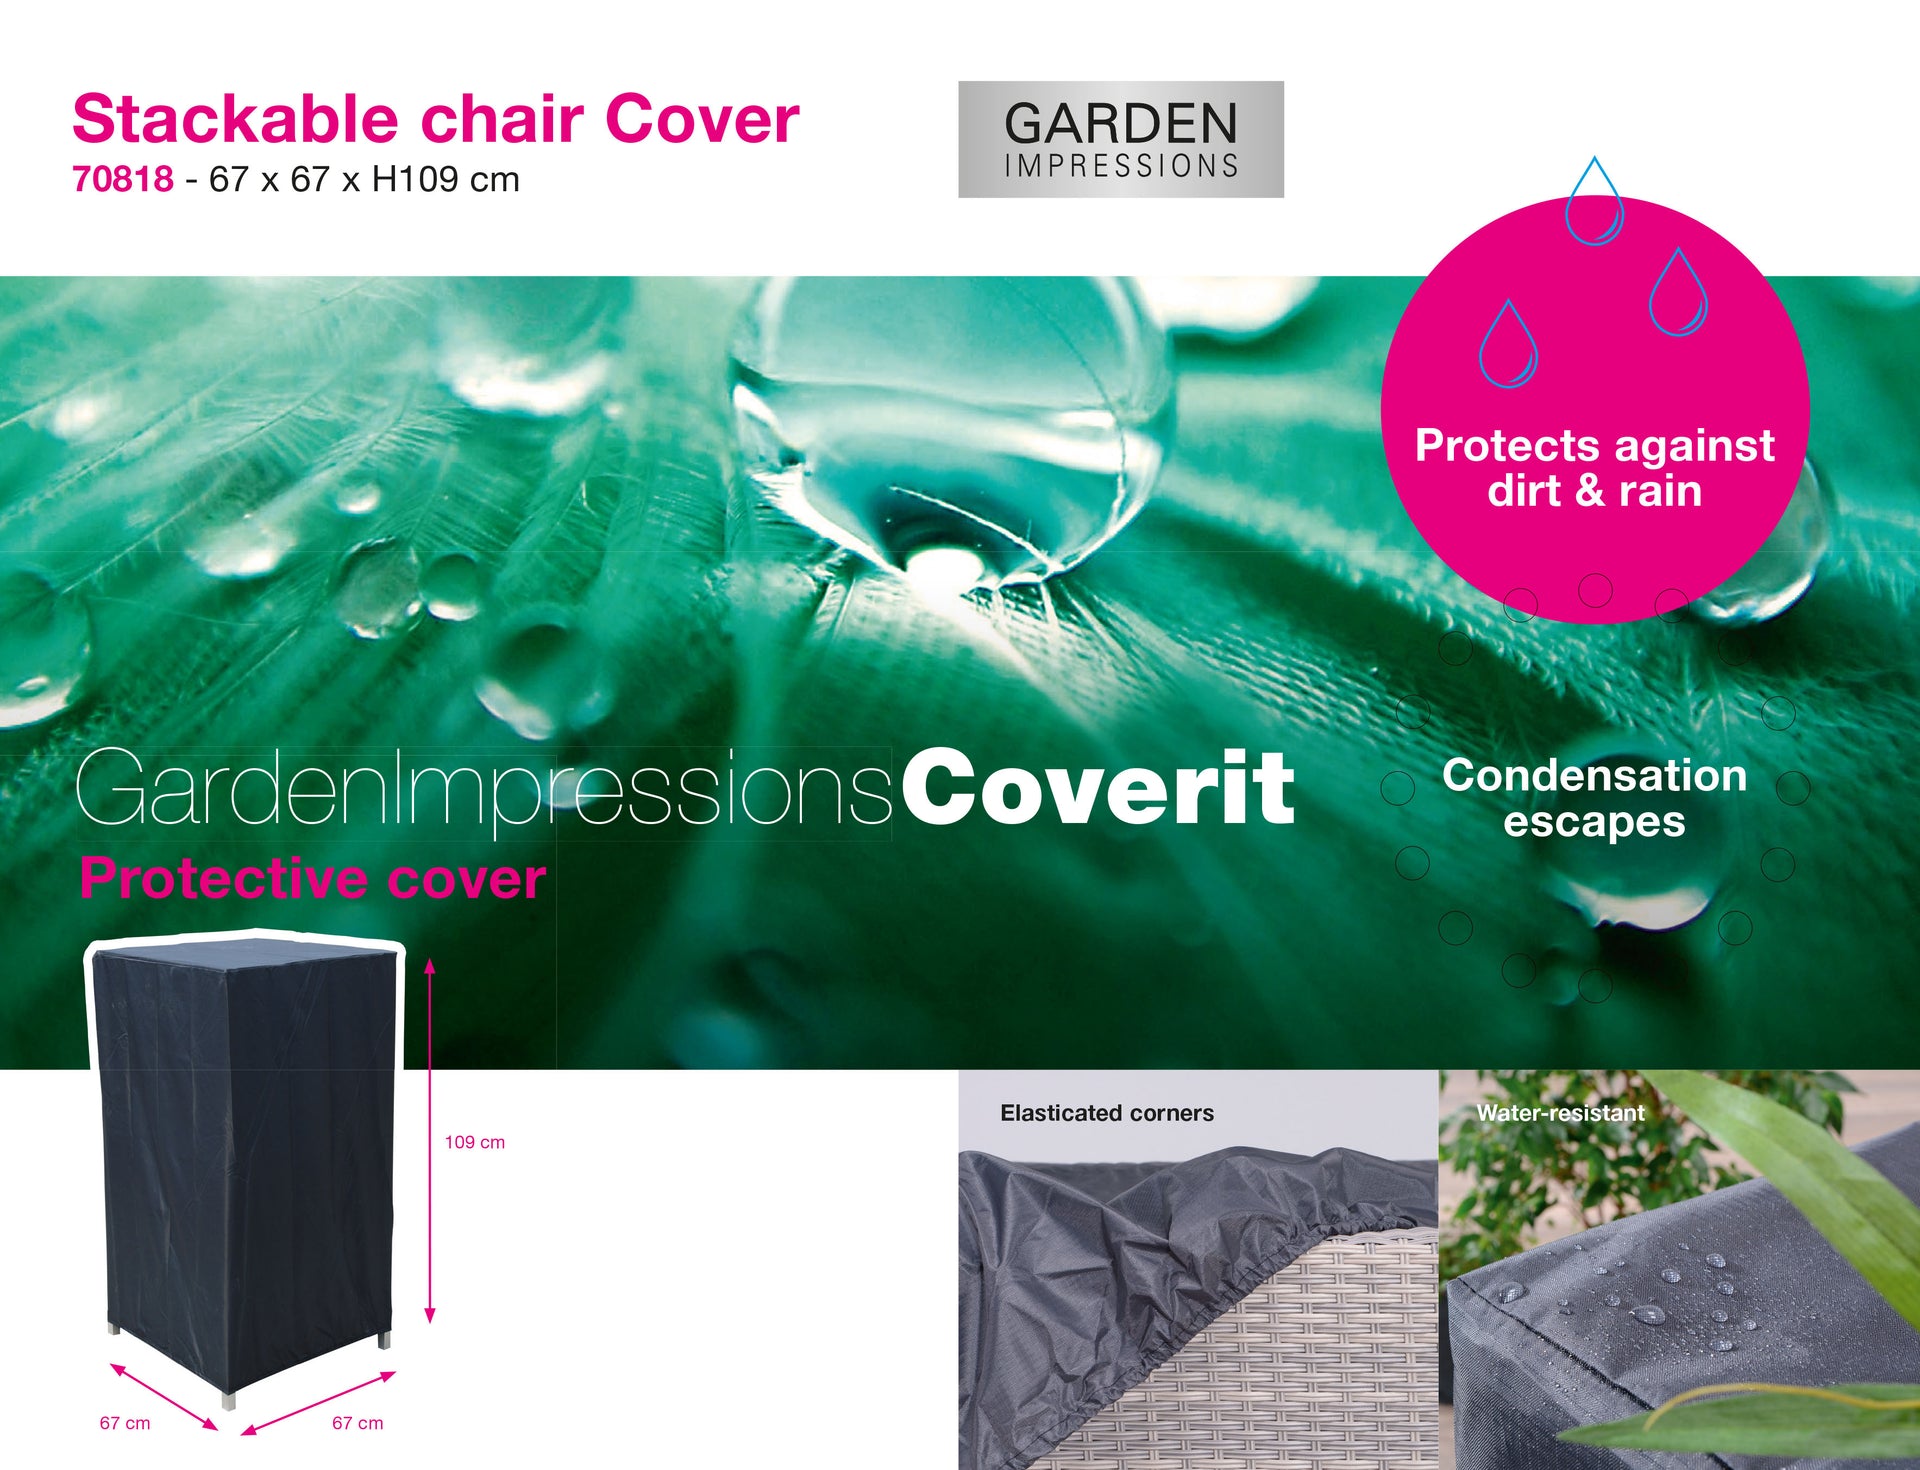 Coverit Stackable Chair Cover 67cm x 67cm x 109cm